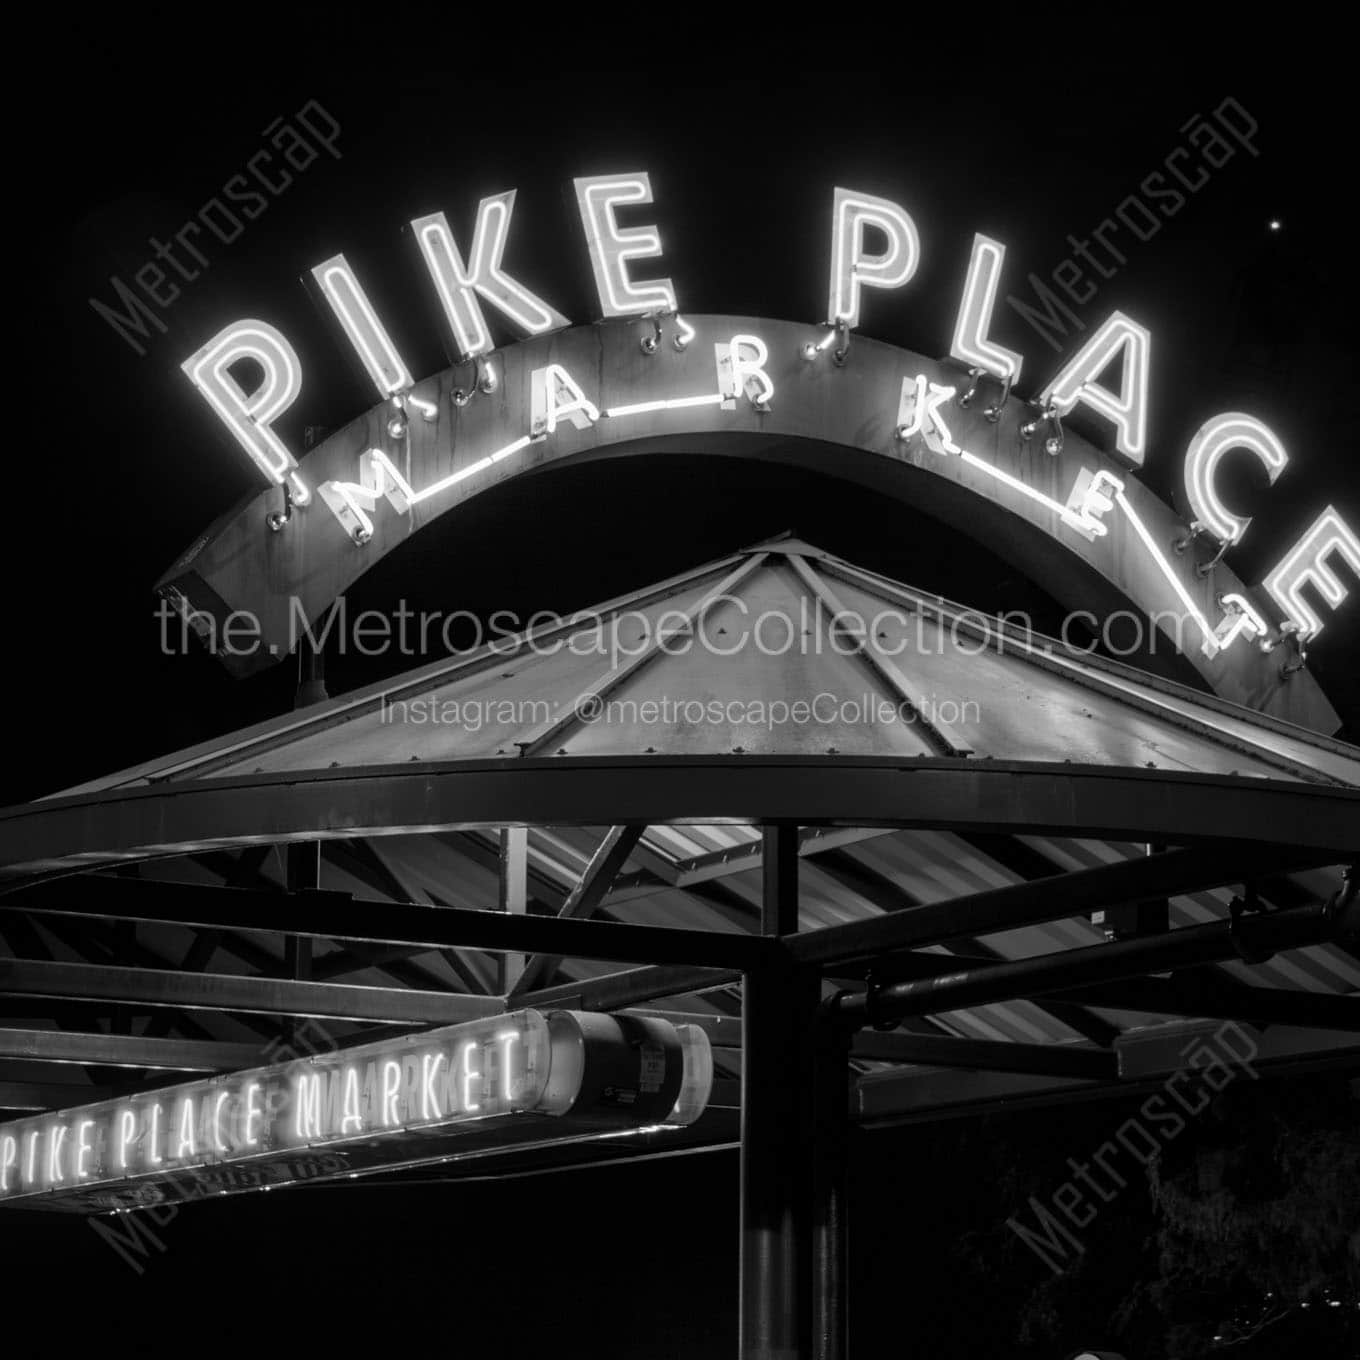 pike place market bus station Black & White Wall Art